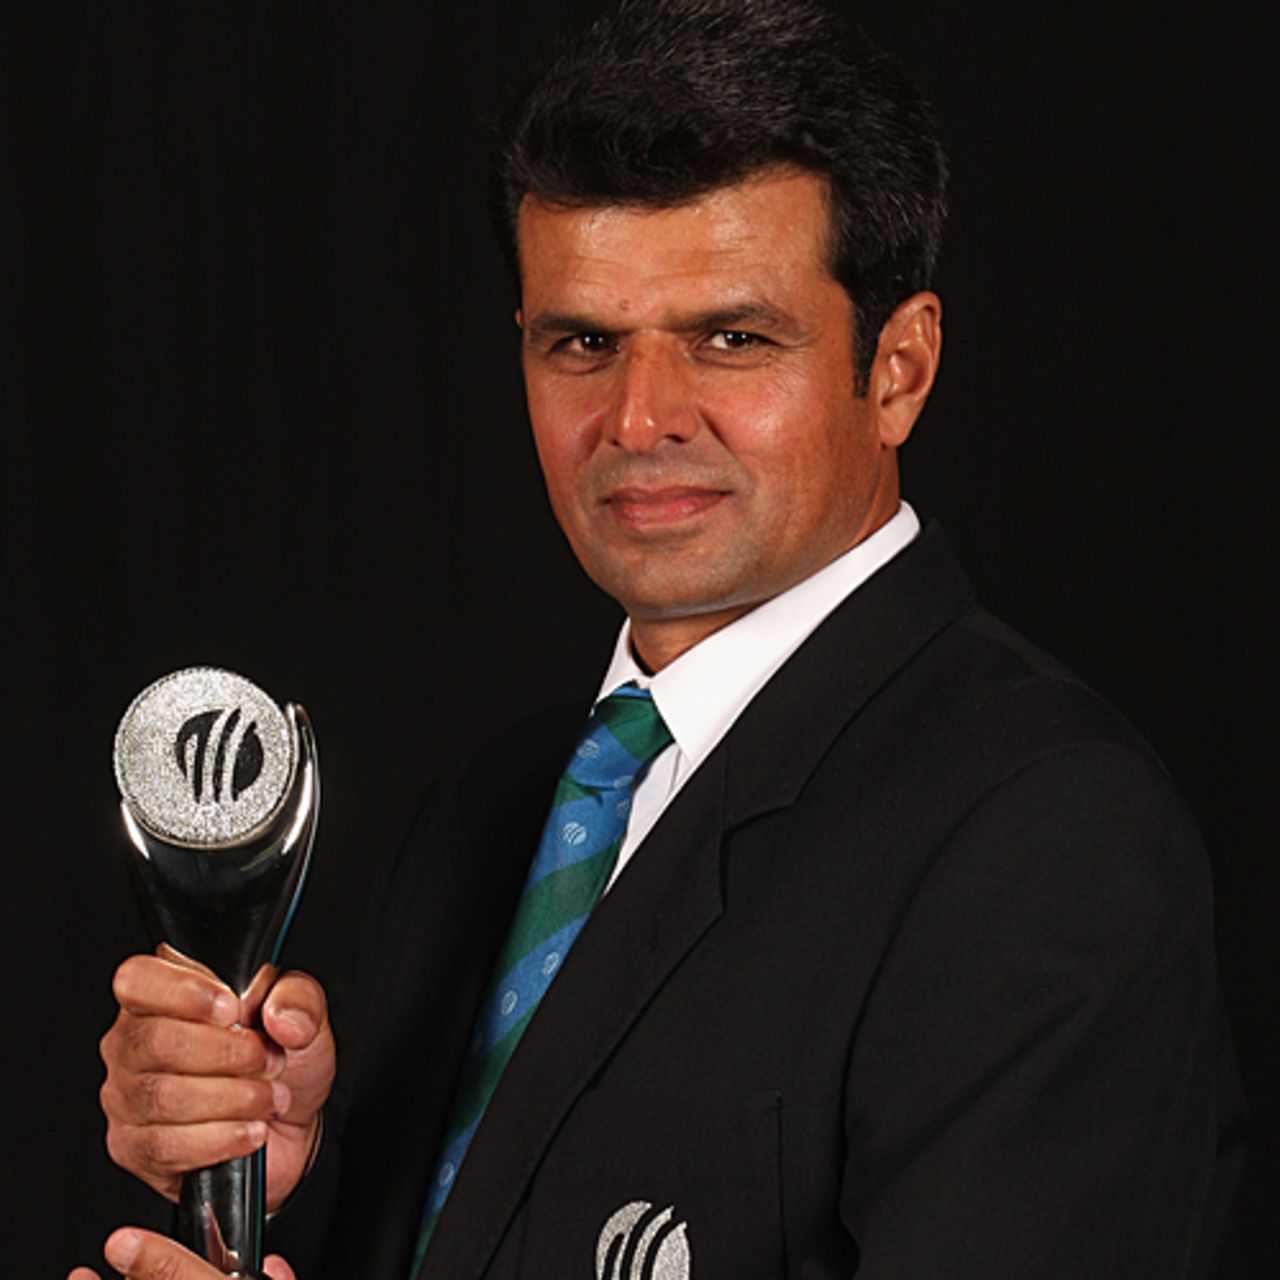 Aleem Dar was named Umpire of the Year, ICC Awards, Johannesburg, October 1, 2009